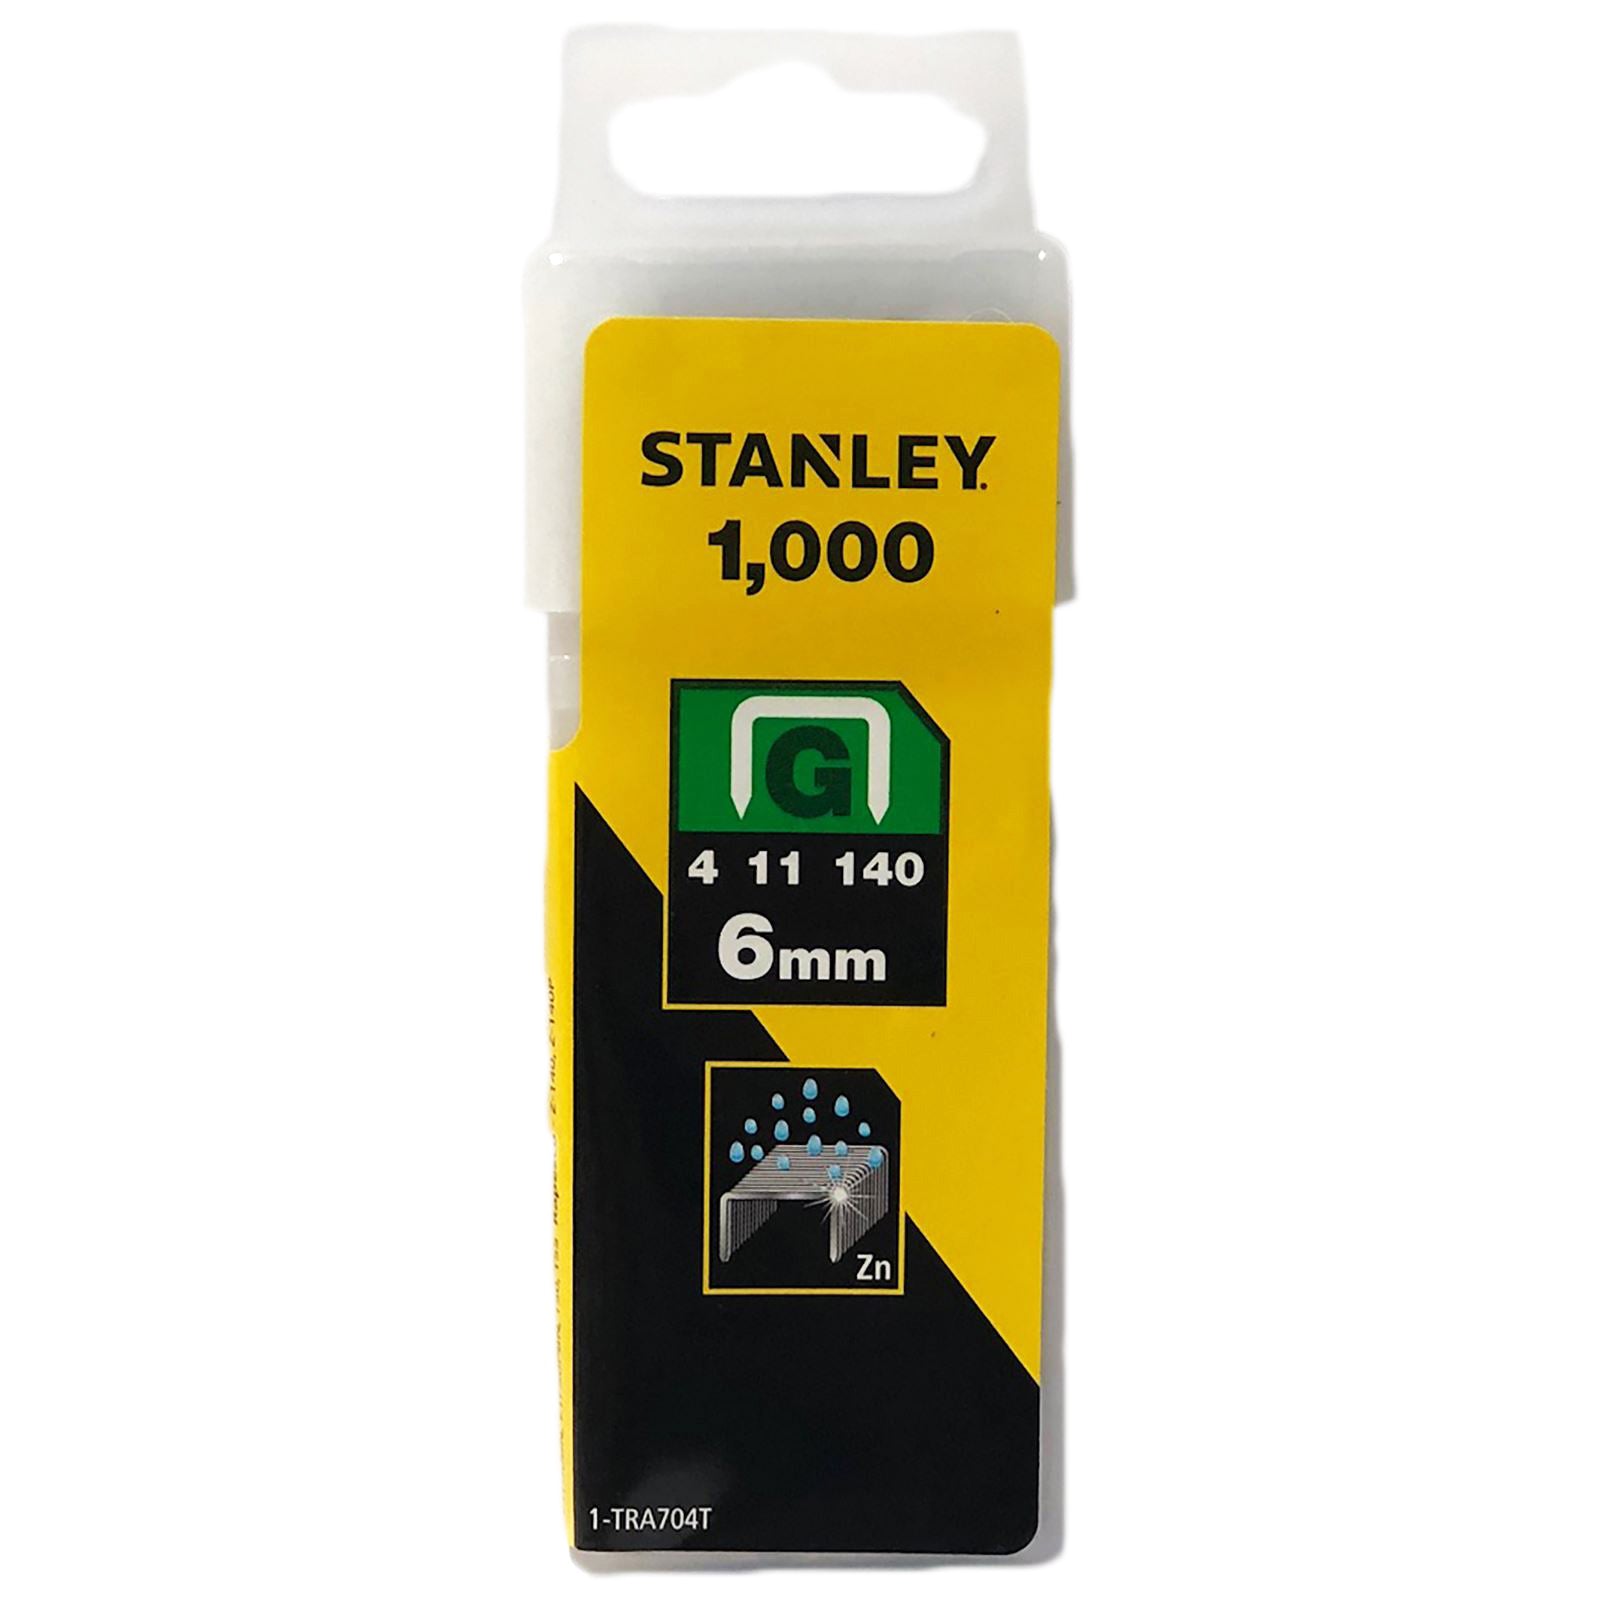 Composite Lightweight Stanley 10mm FatMax Stap Tacker 1000 with Hammer